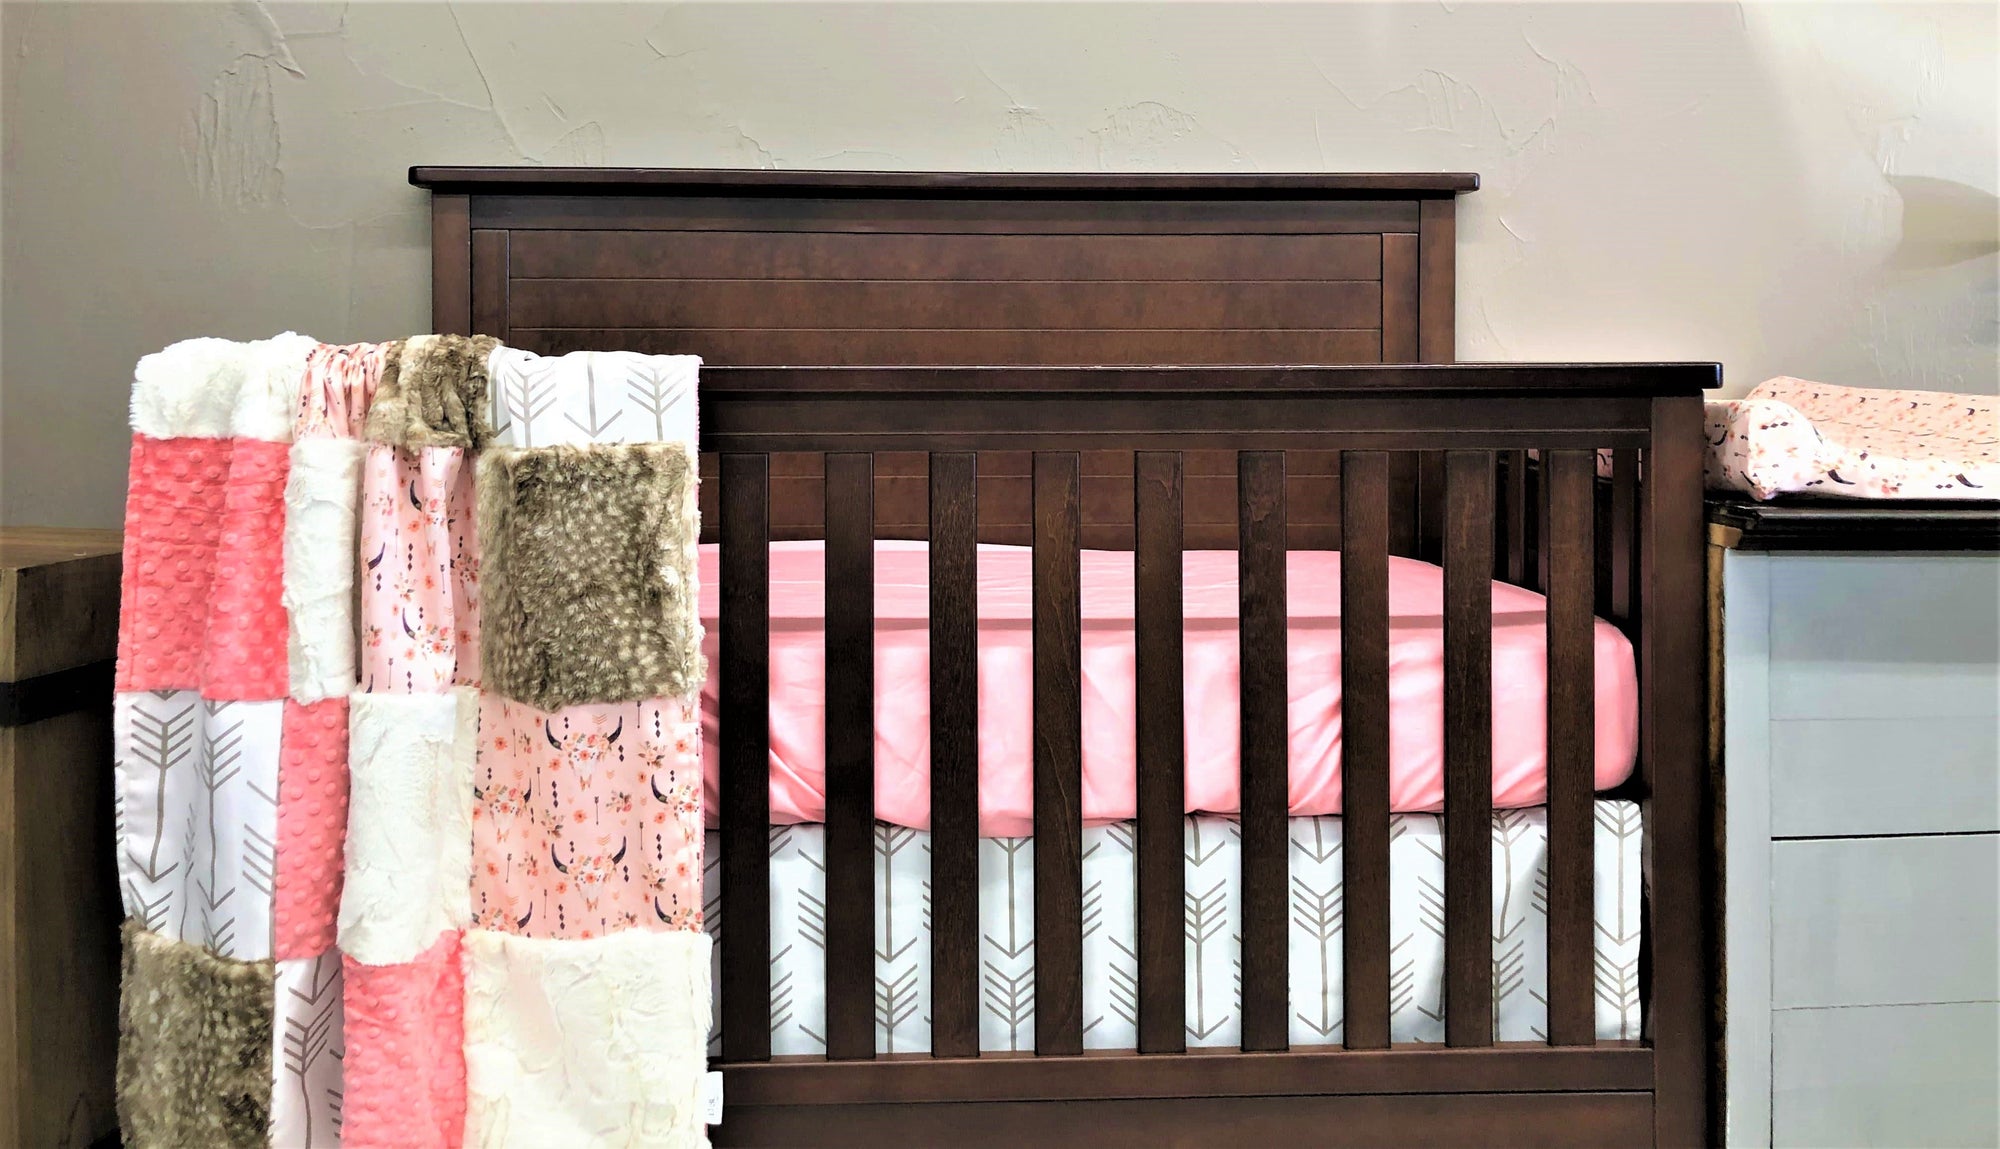 Custom Girl Crib Bedding - Boho Steer and Fawn Minky Western Baby Bedding Nursery Collection - DBC Baby Bedding Co 